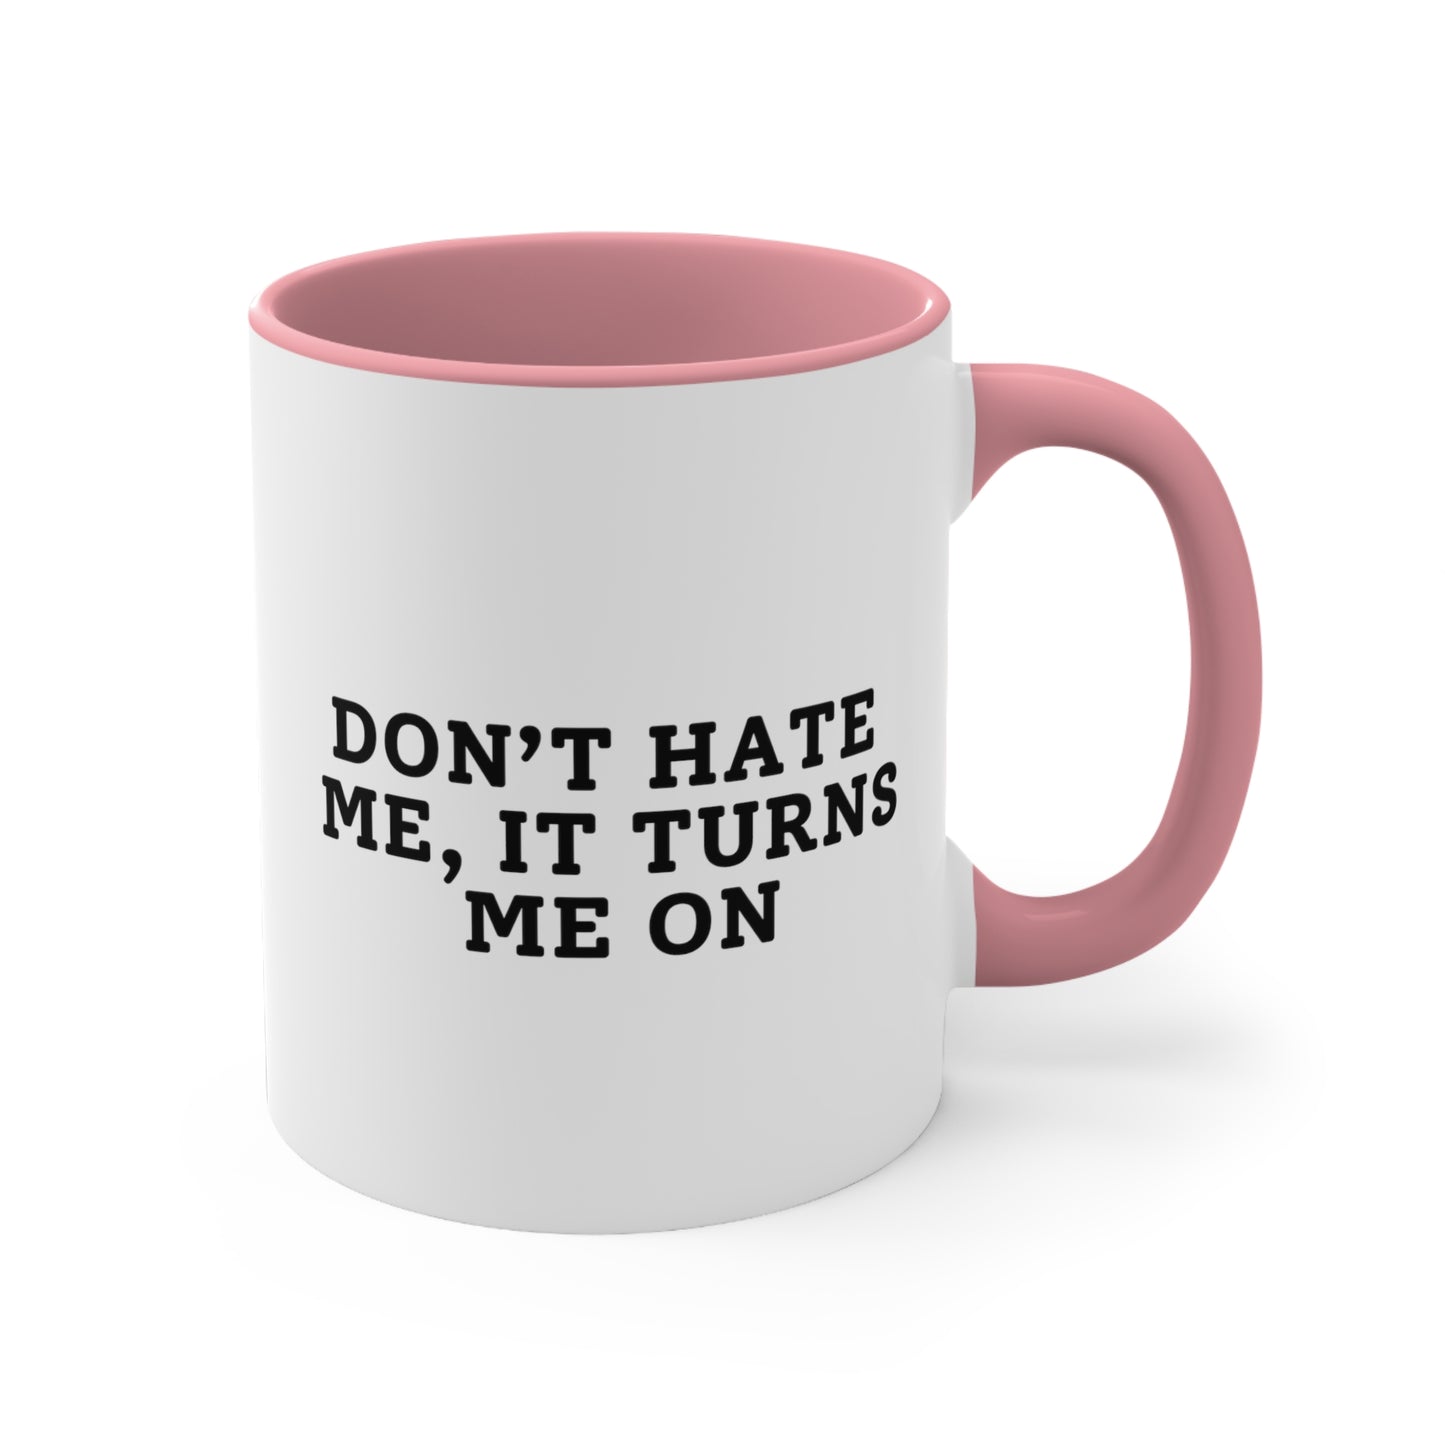 Don't Hate Me, It Turns Me On - Pink Mug